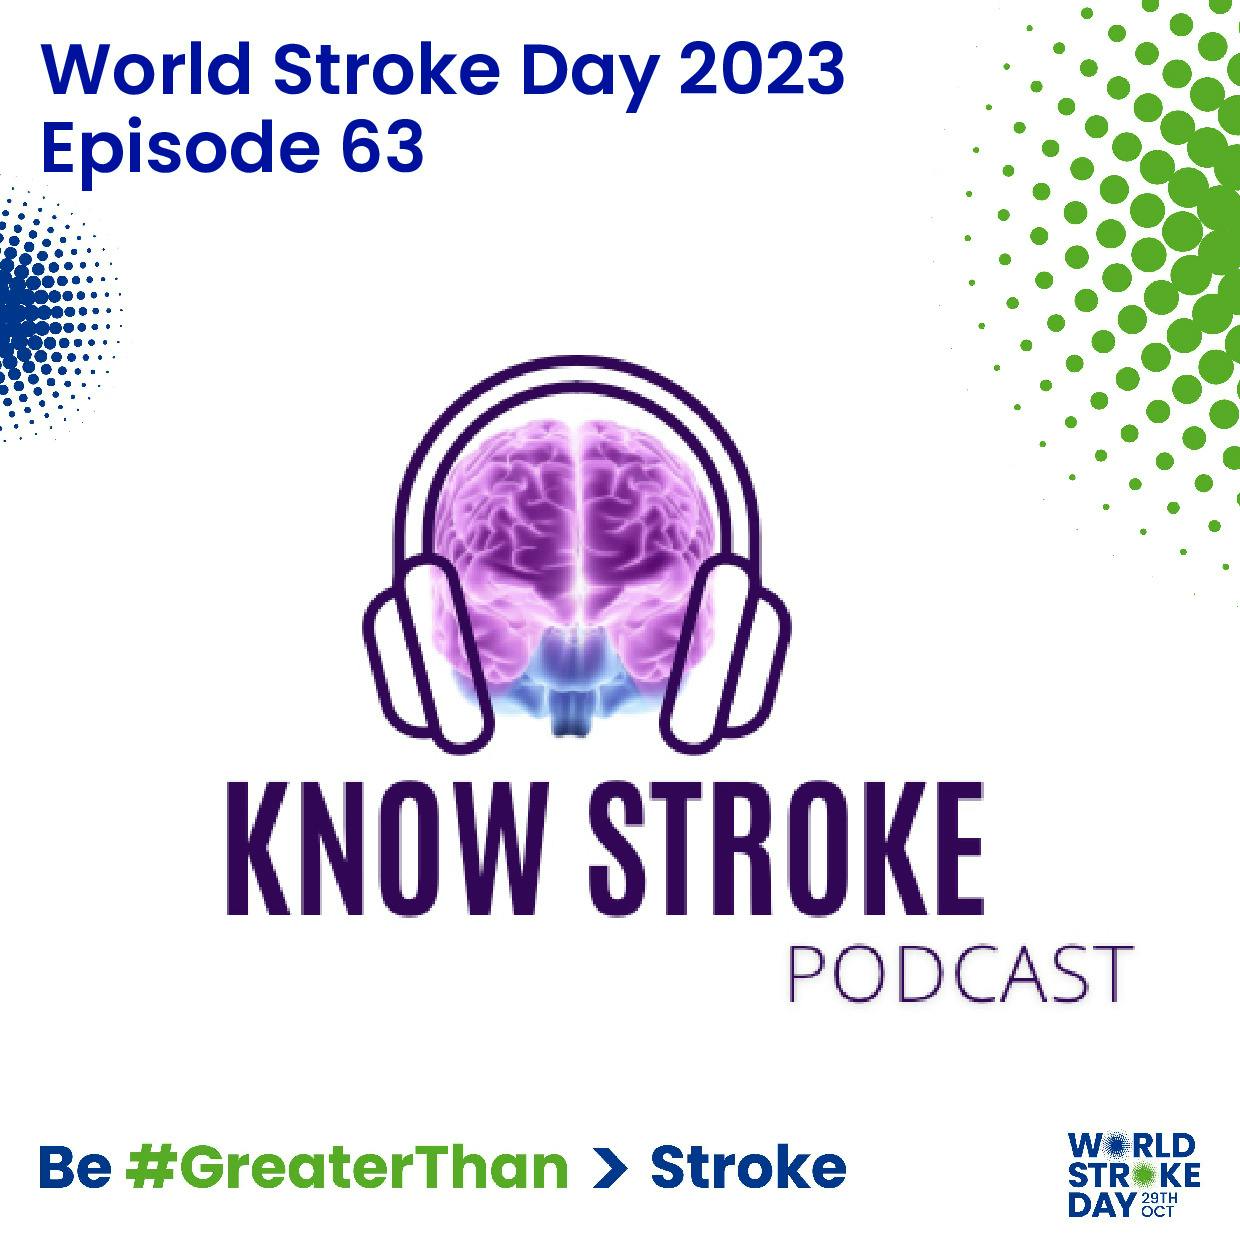 2023 World Stroke Day #GreaterThanStroke